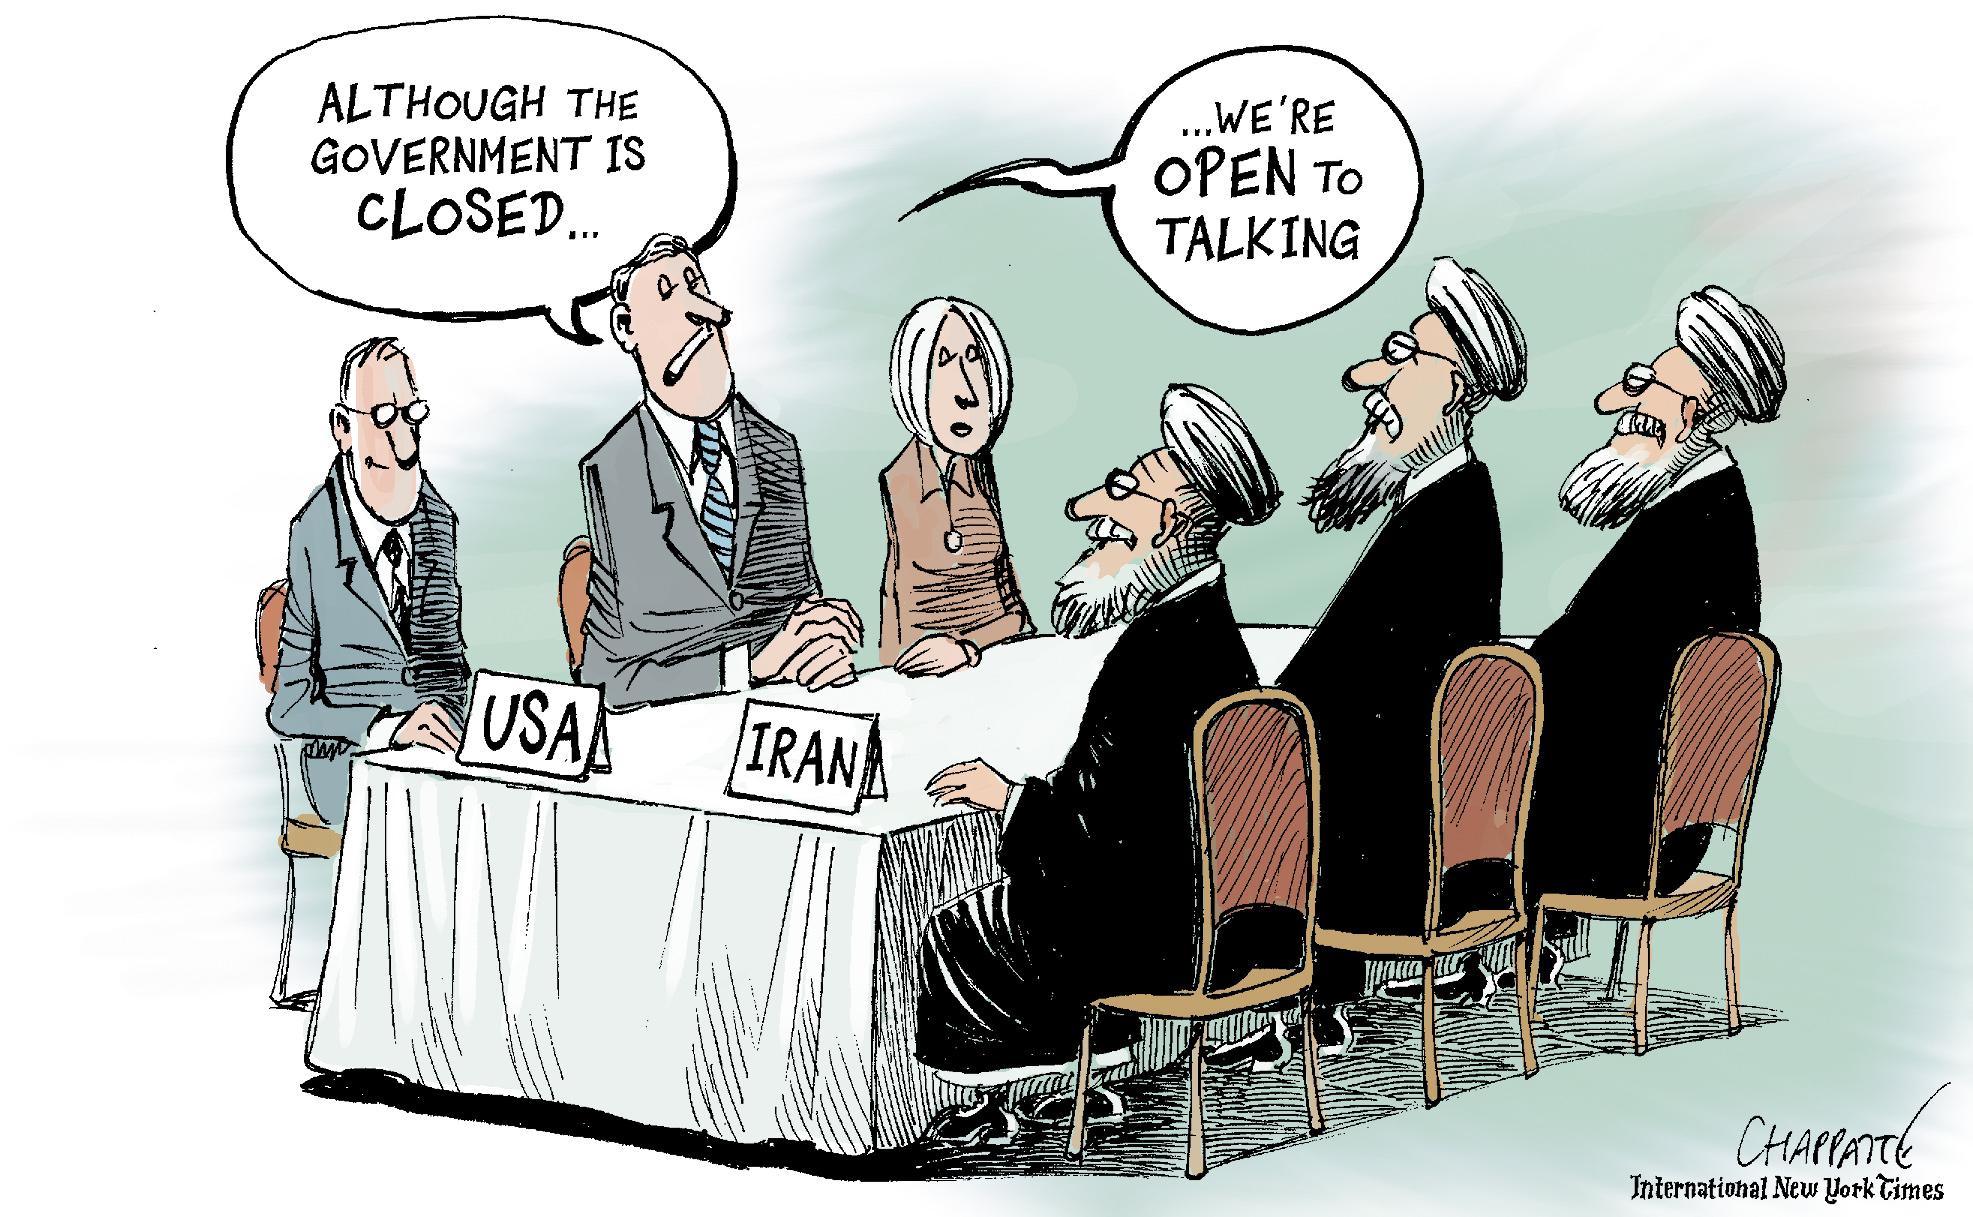 Nuclear talks with Iran